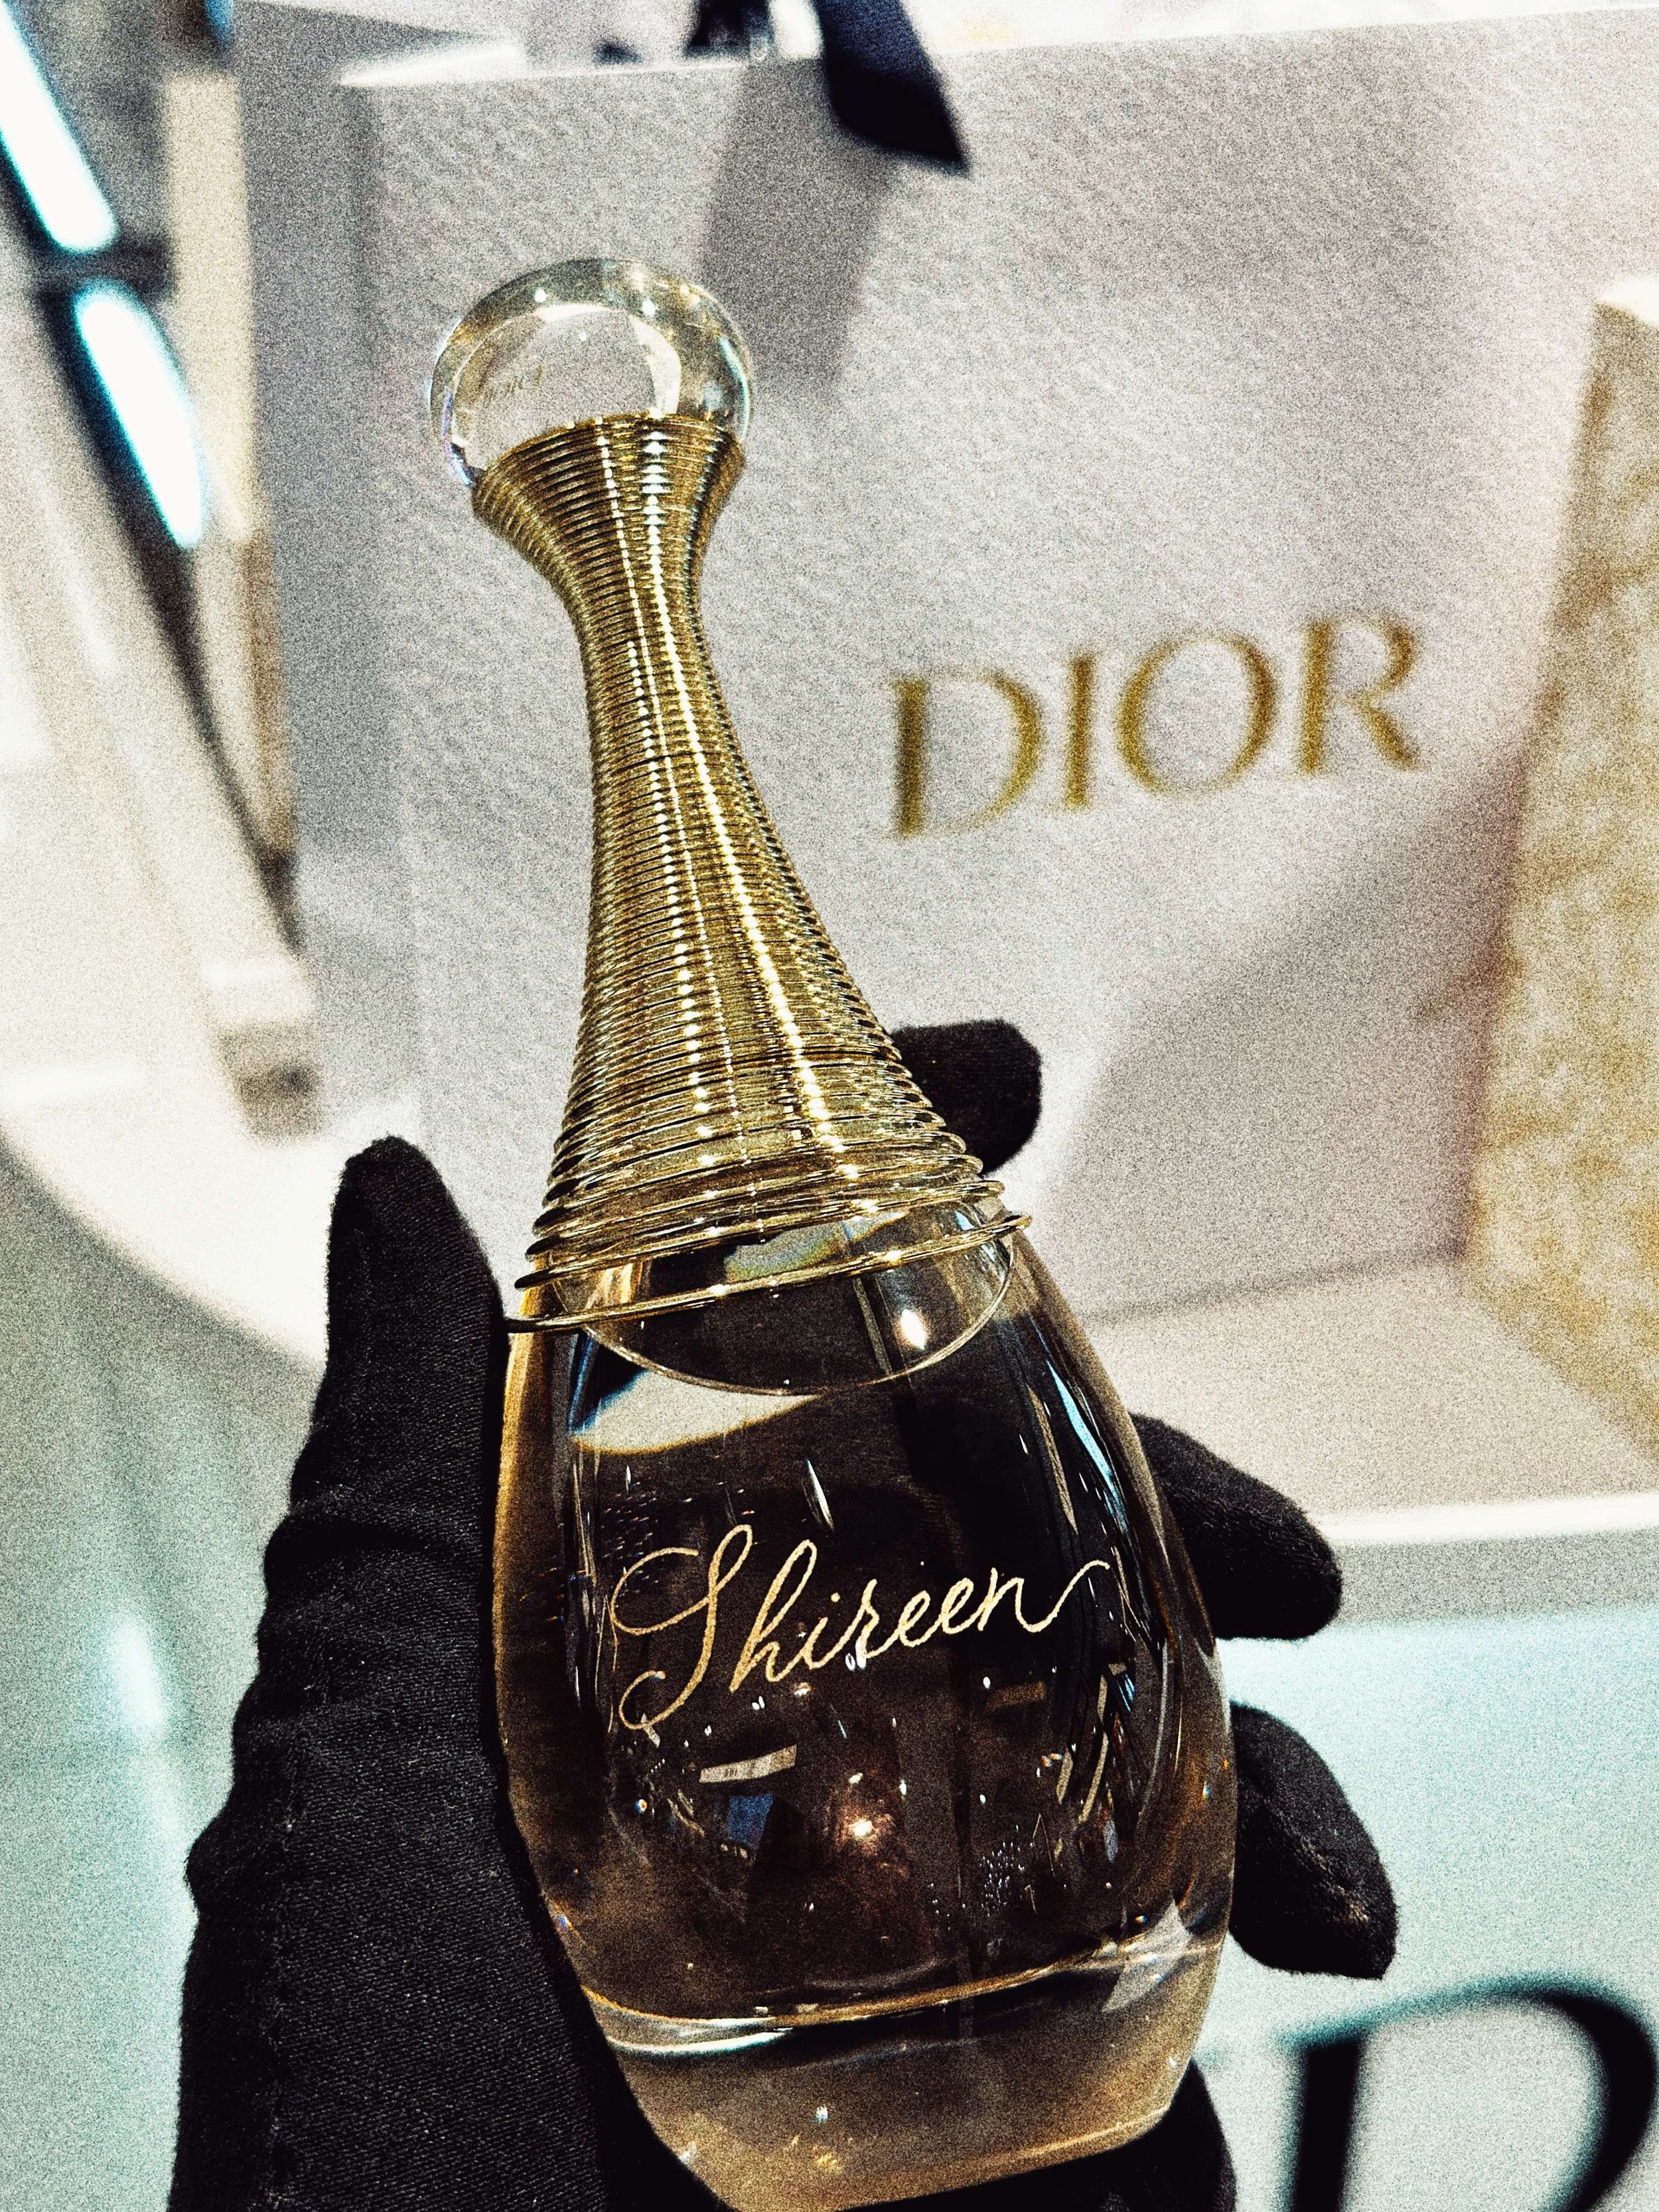 engraved-dior-perfume.jpeg